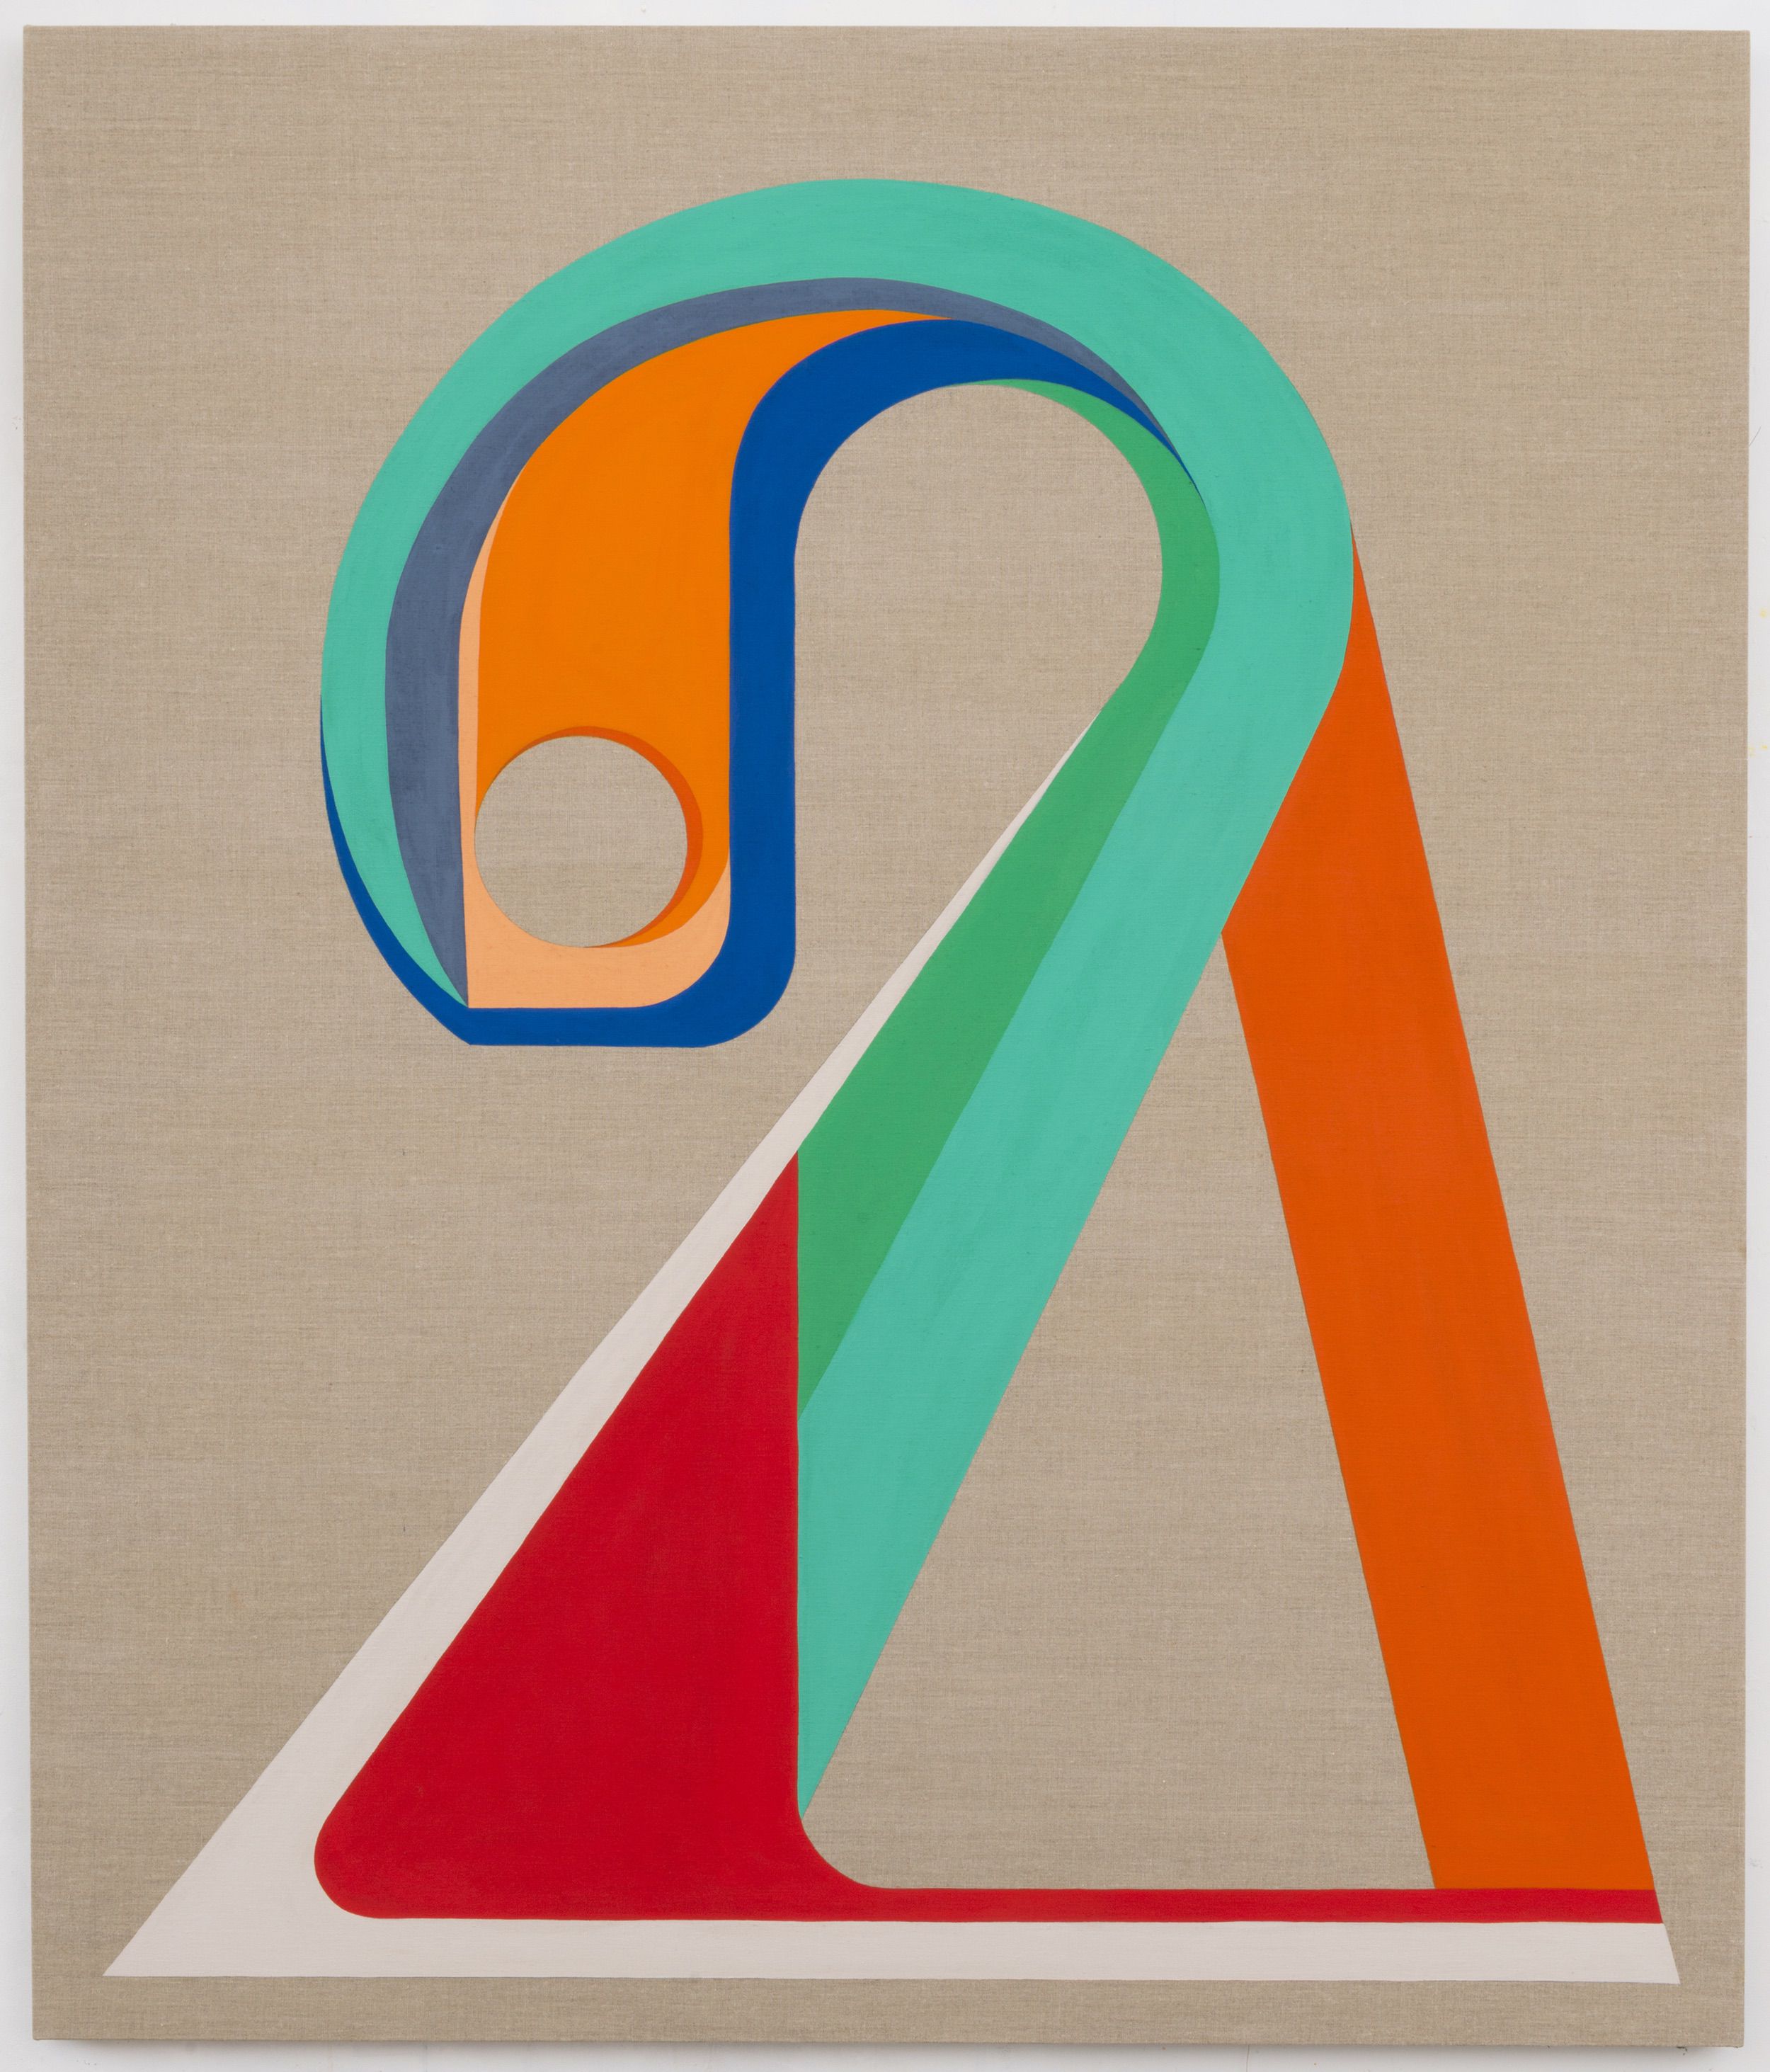  Eamon Ore-Giron  &amp; , 2015 Flashe on raw canvas 68 x 60 inches 